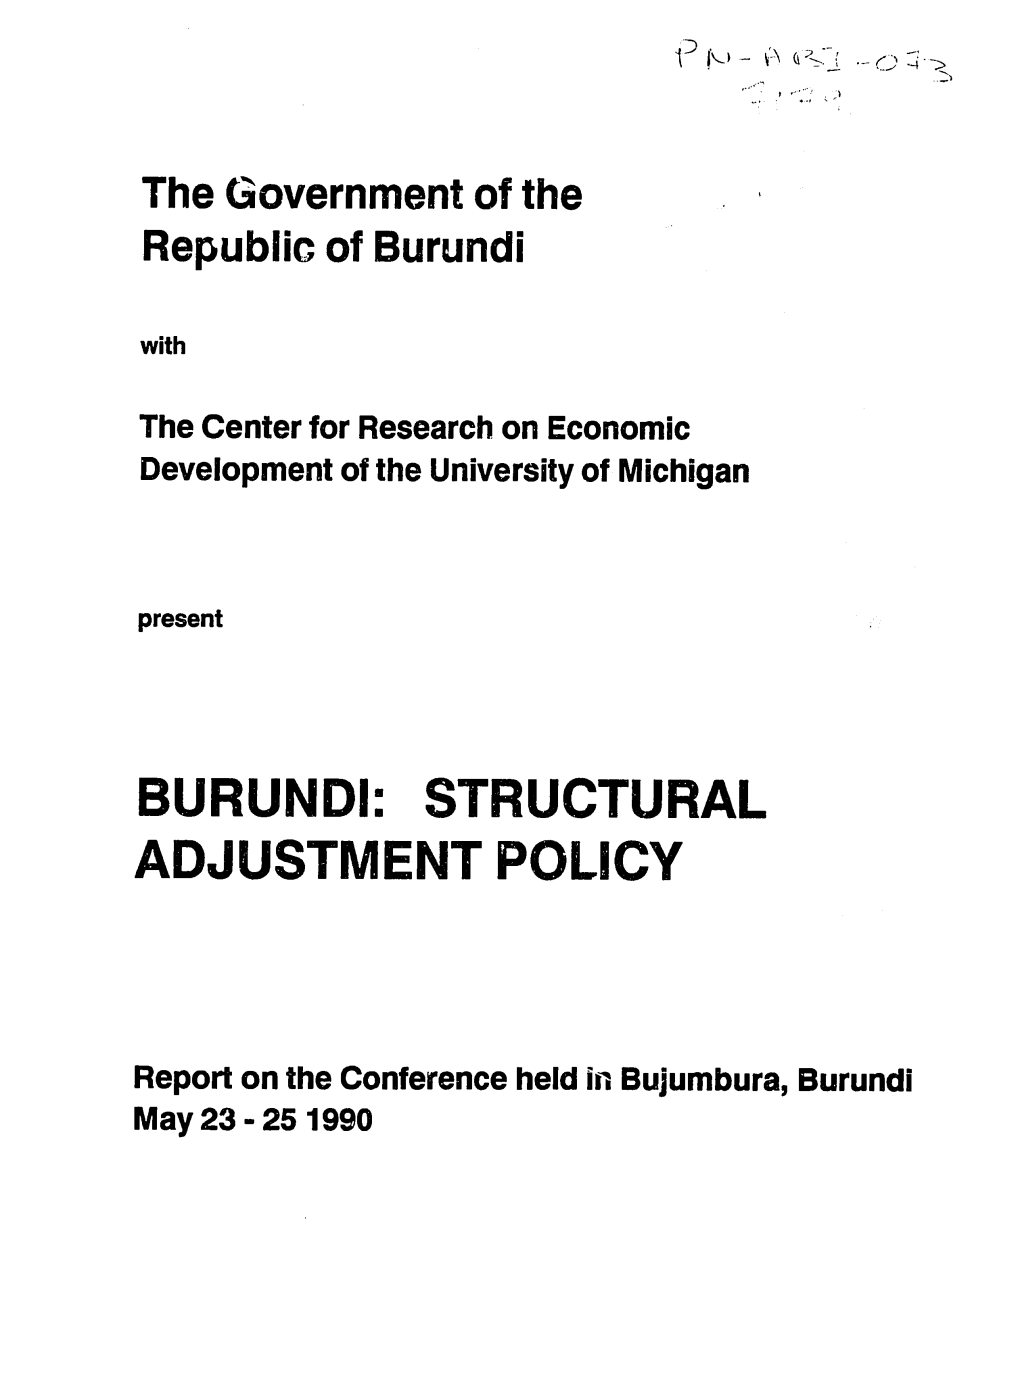 Burundi: Structural Adjustment Policy